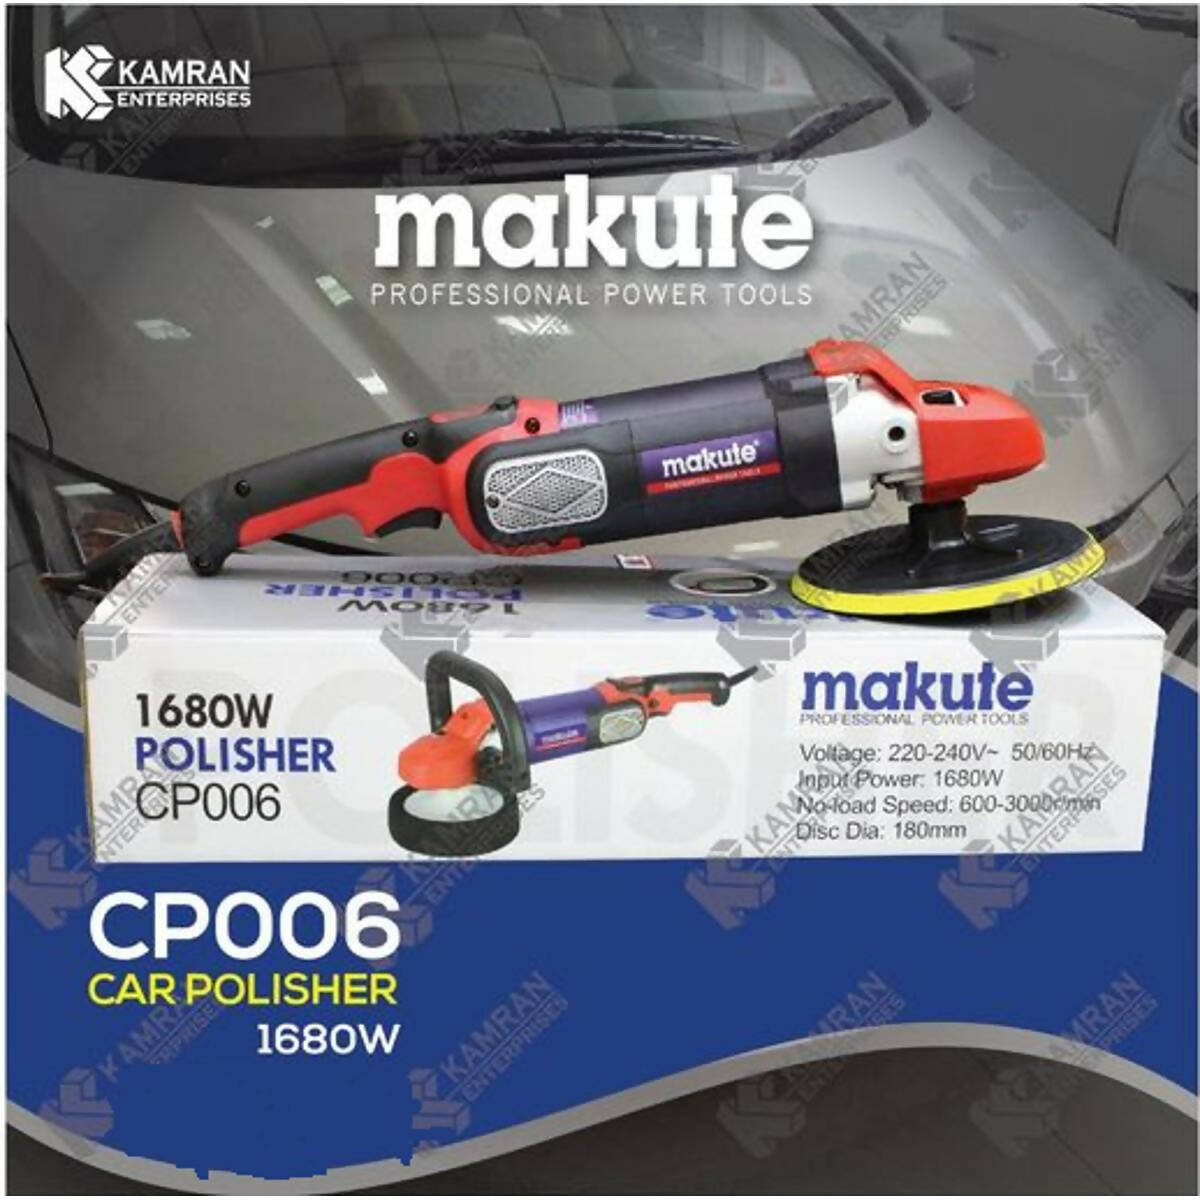 Makute Cp006 Car Polisher 1680watts - 100% Copper